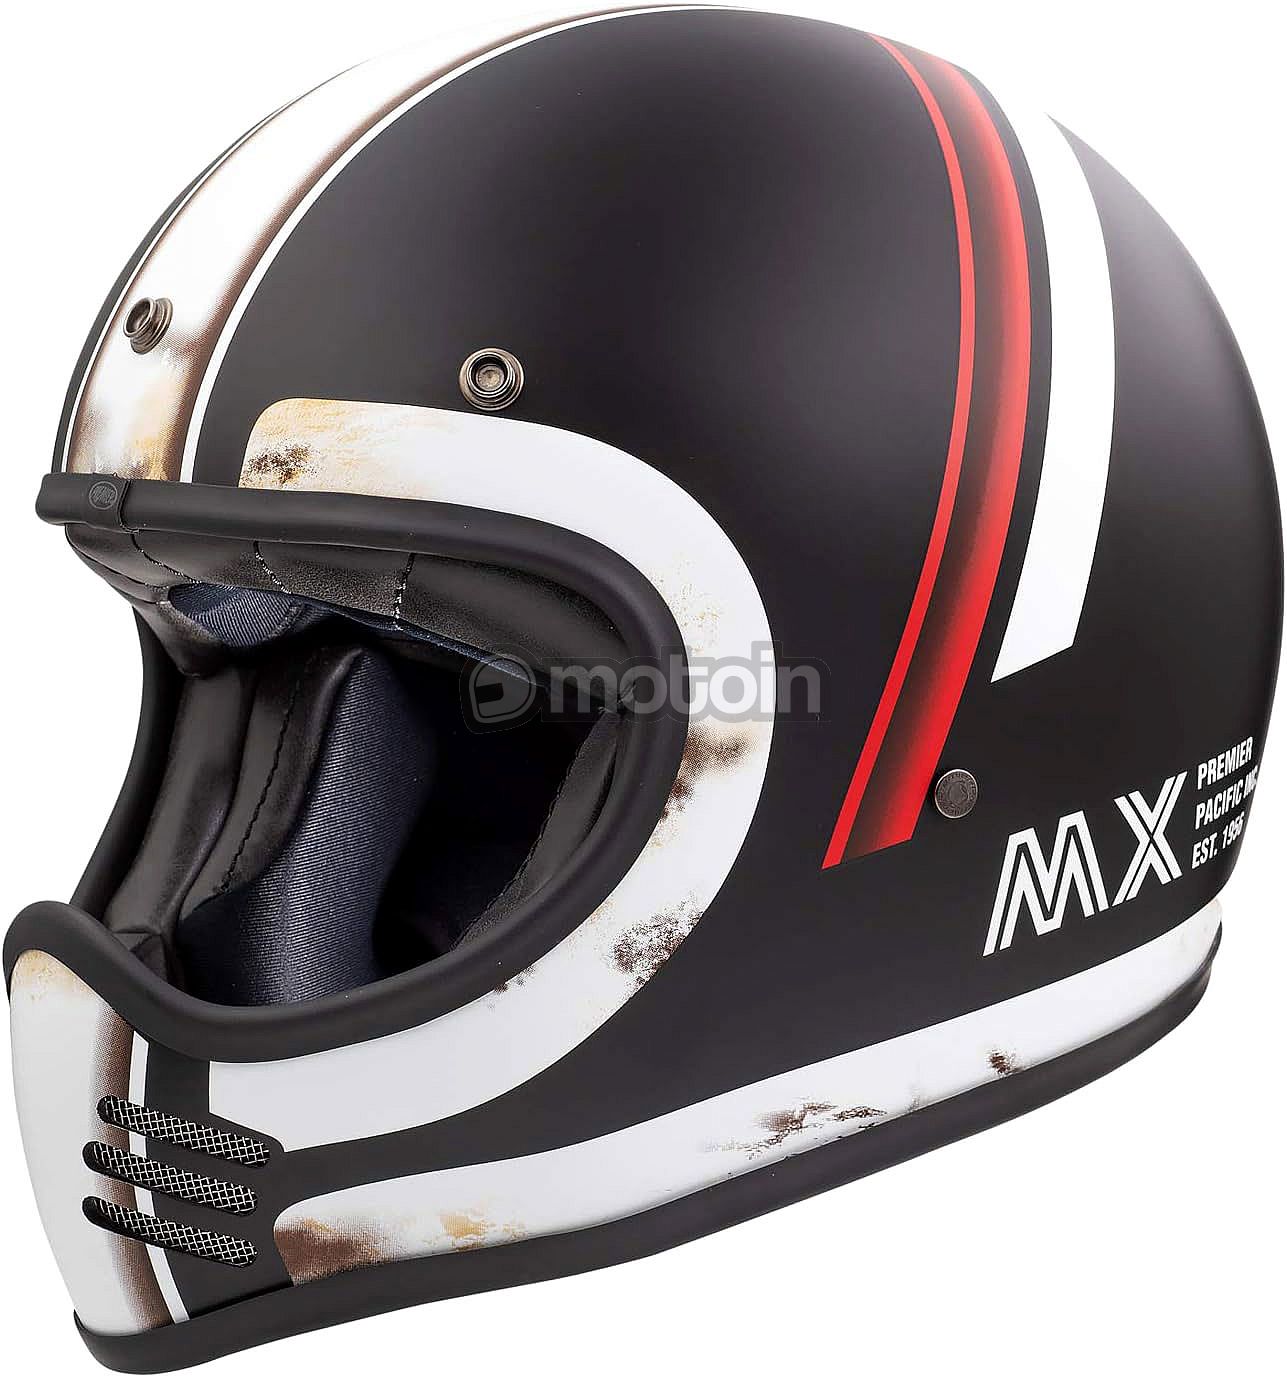 Premier Trophy MX DO O.S., integral helmet